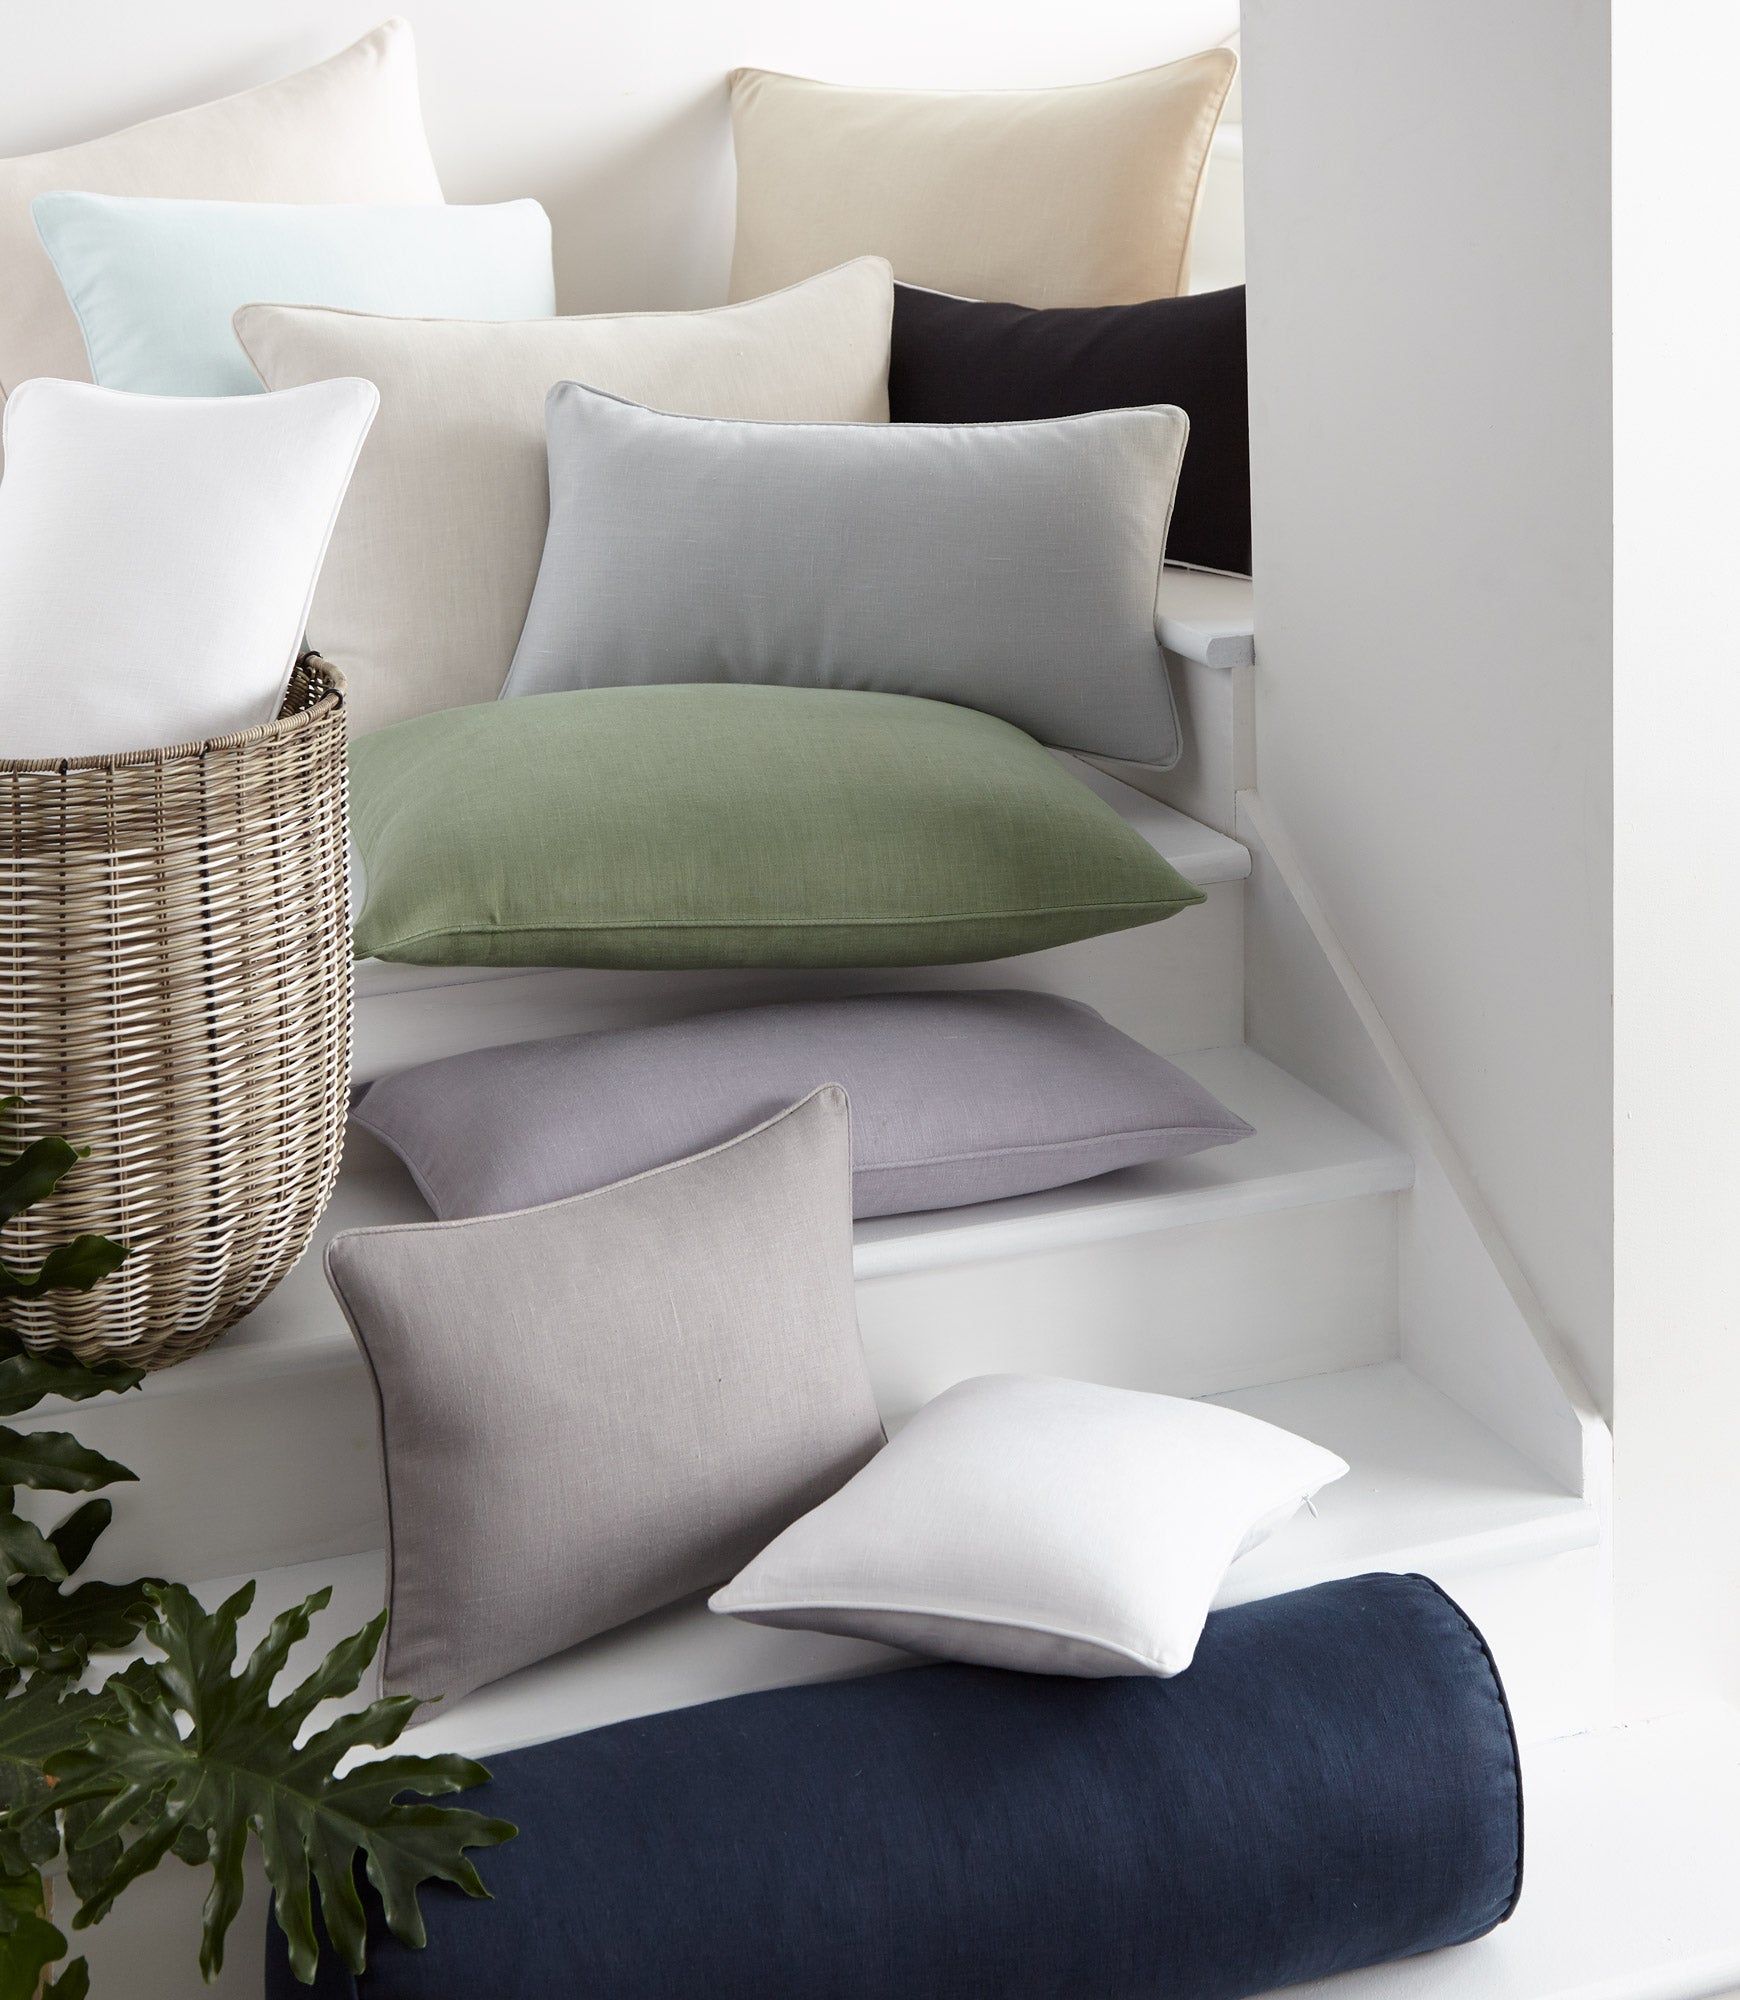 Bed Pillows & Decorative Pillows, Throw Pillow, Pillow Shams